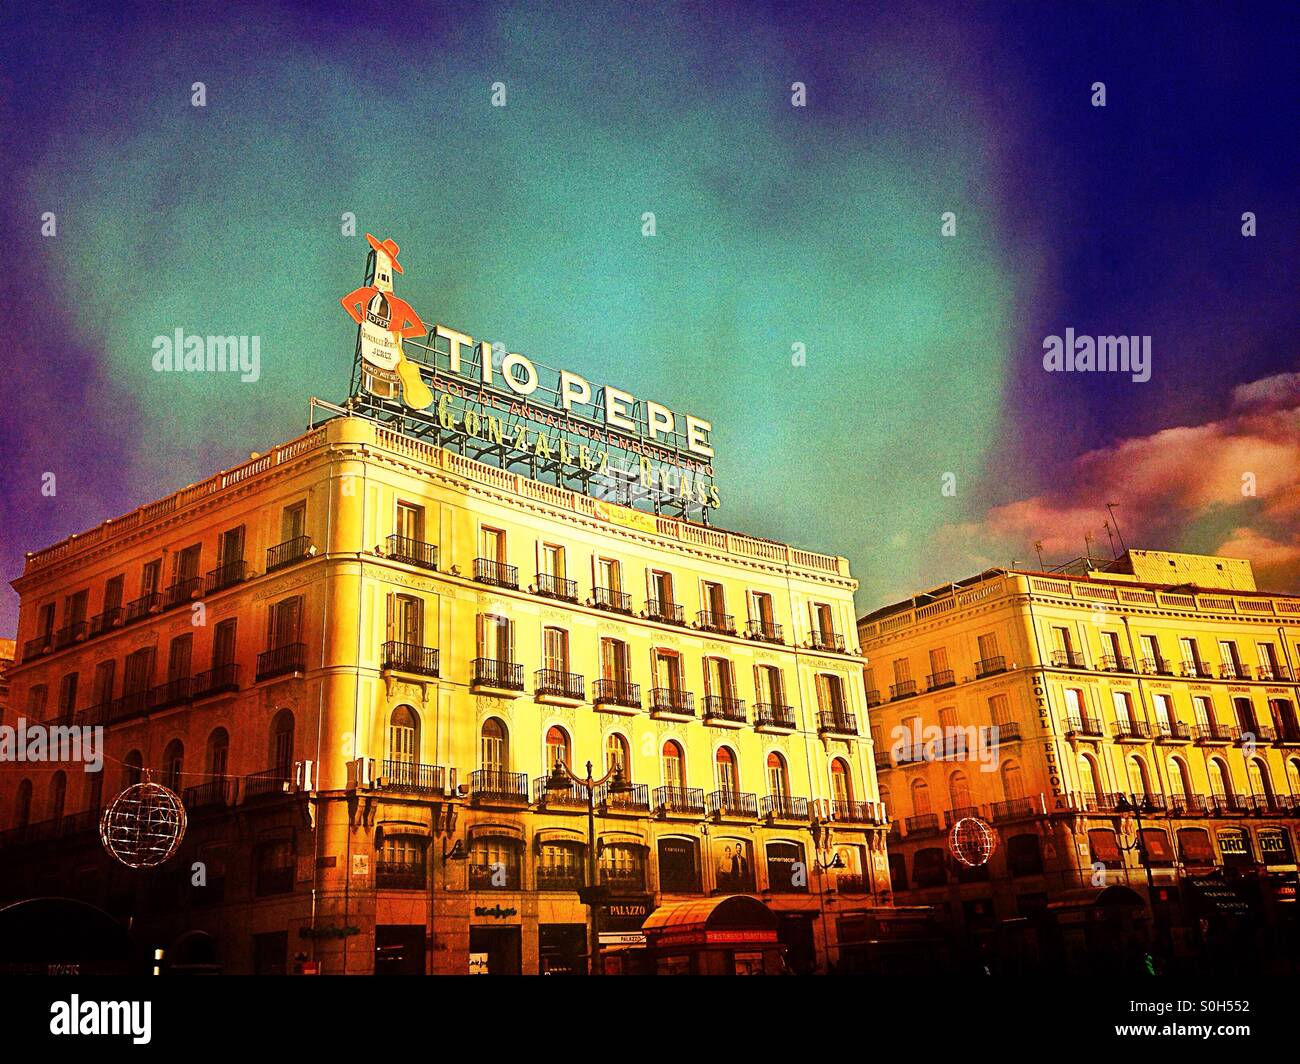 Tio Pepe building in Madrid, Spain Stock Photo